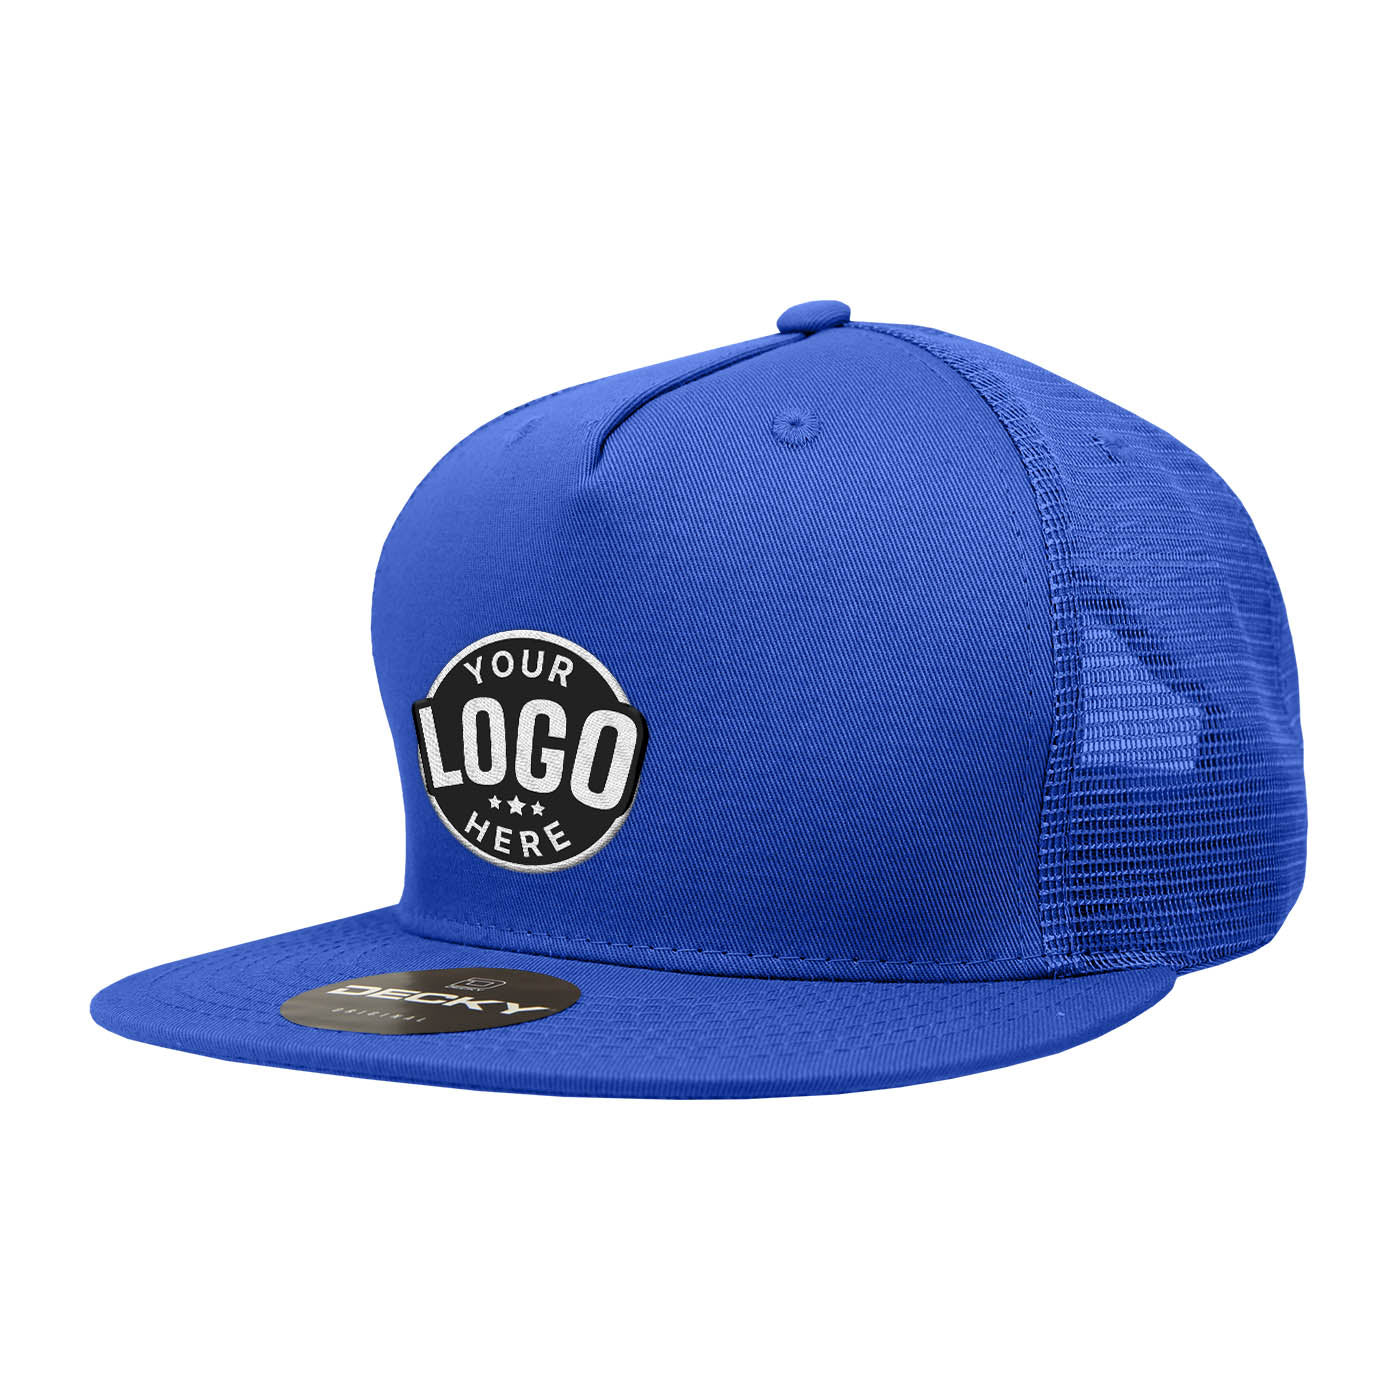 Custom Embroidered Decky 1040 - 5 Panel Trucker Snapback Hat